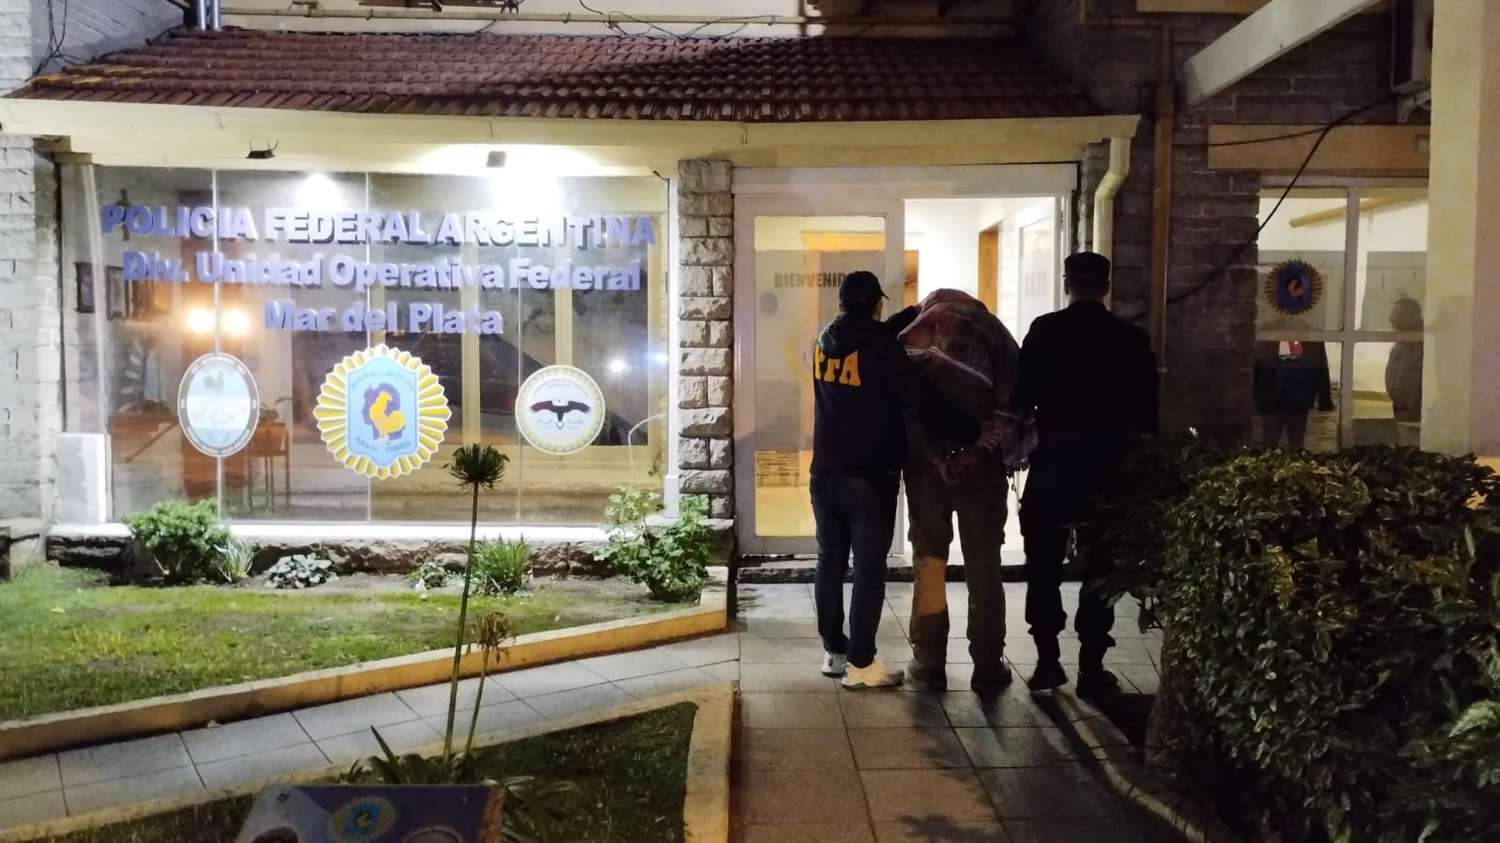 "Droga a marzo": Policía Federal detuvo a banda narco que vendía droga en escuelas